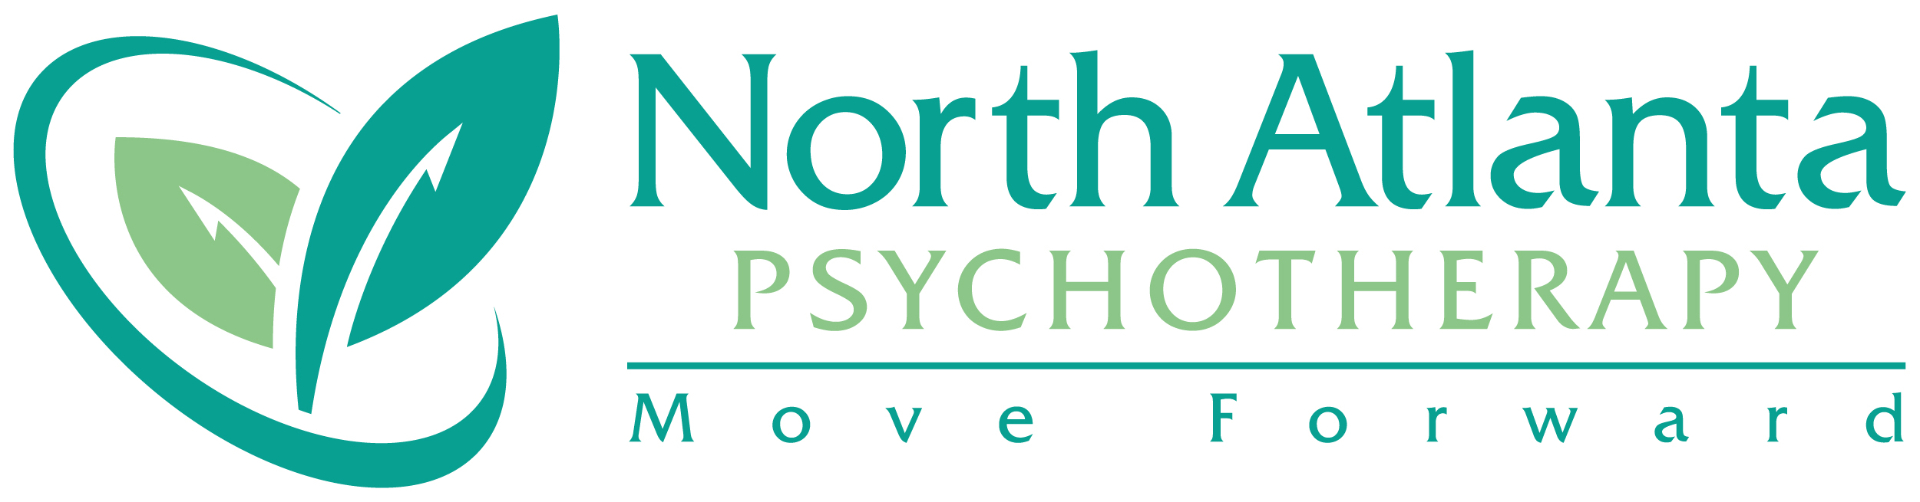 North Atlanta Psychotherapy